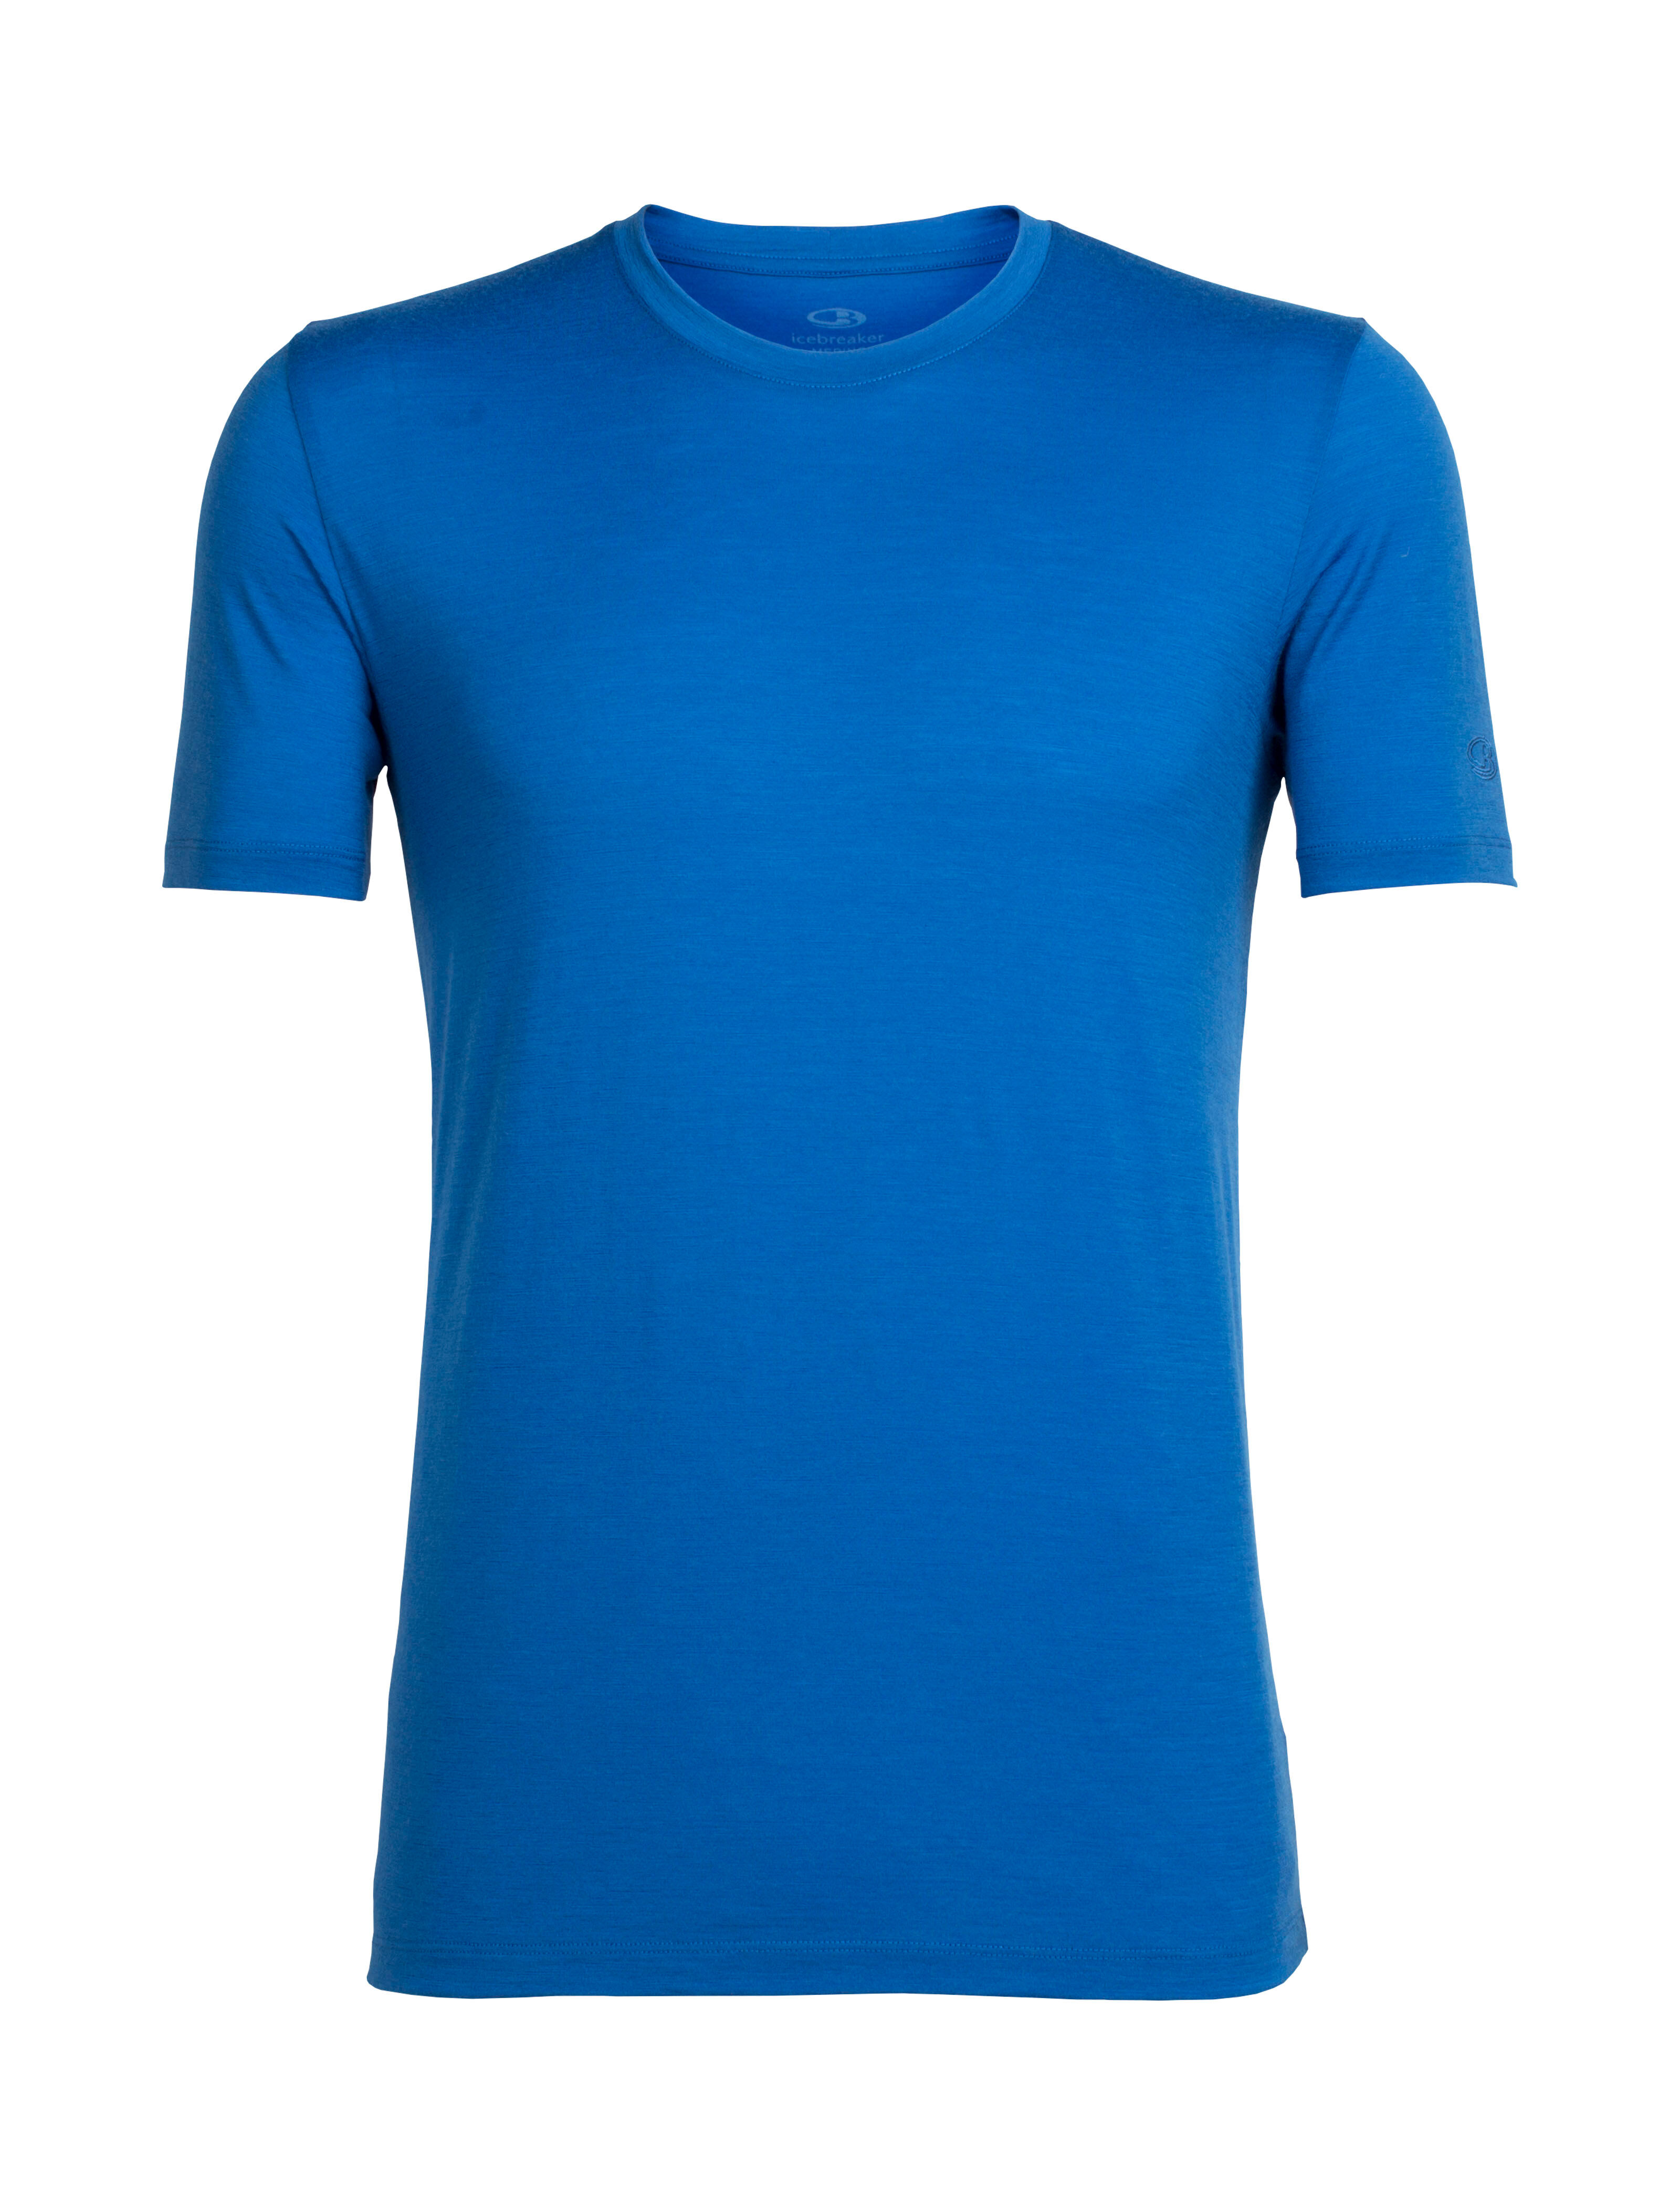 Icebreaker - Tech Lite Short Sleeve Crewe - T-shirt - Uomo